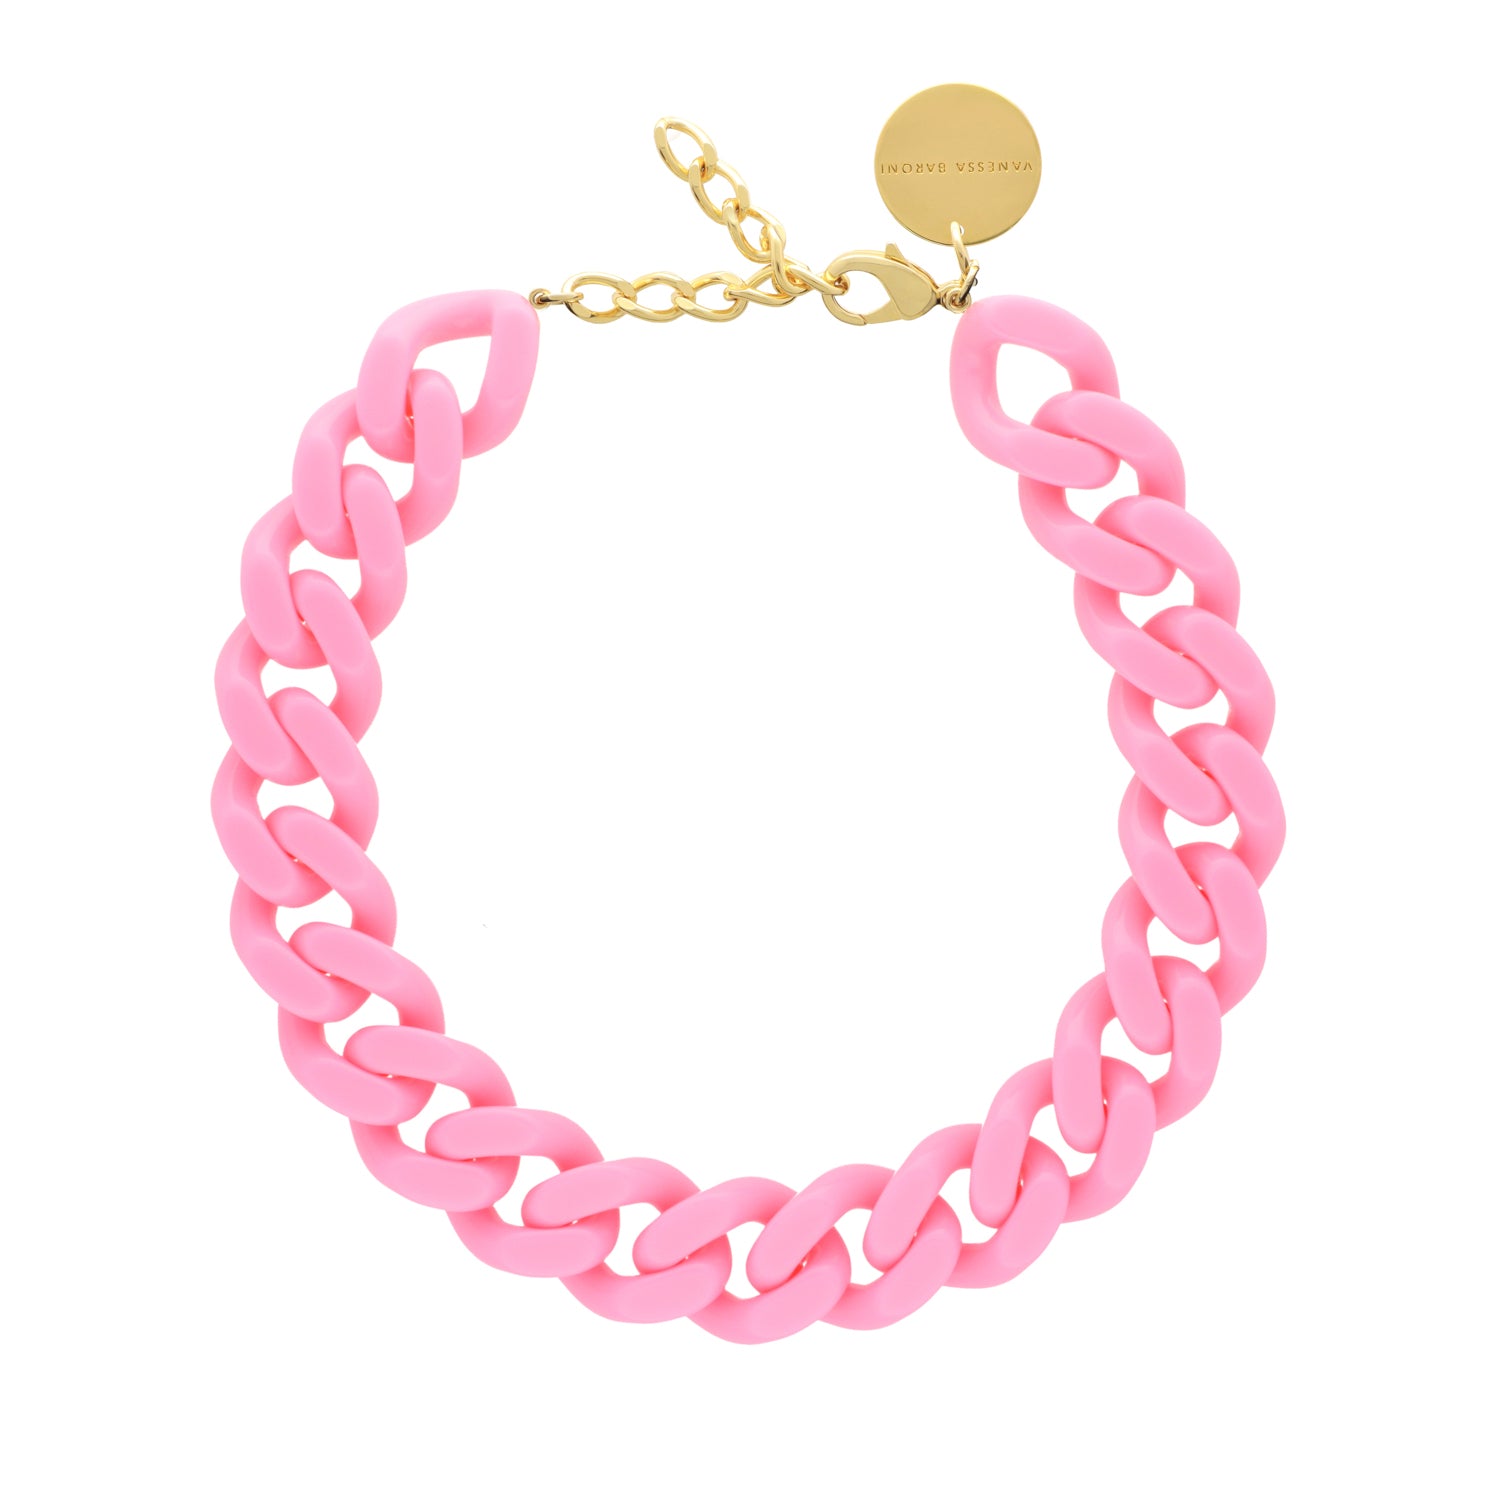 5 sets of bubblegum necklaces - Girls accessories